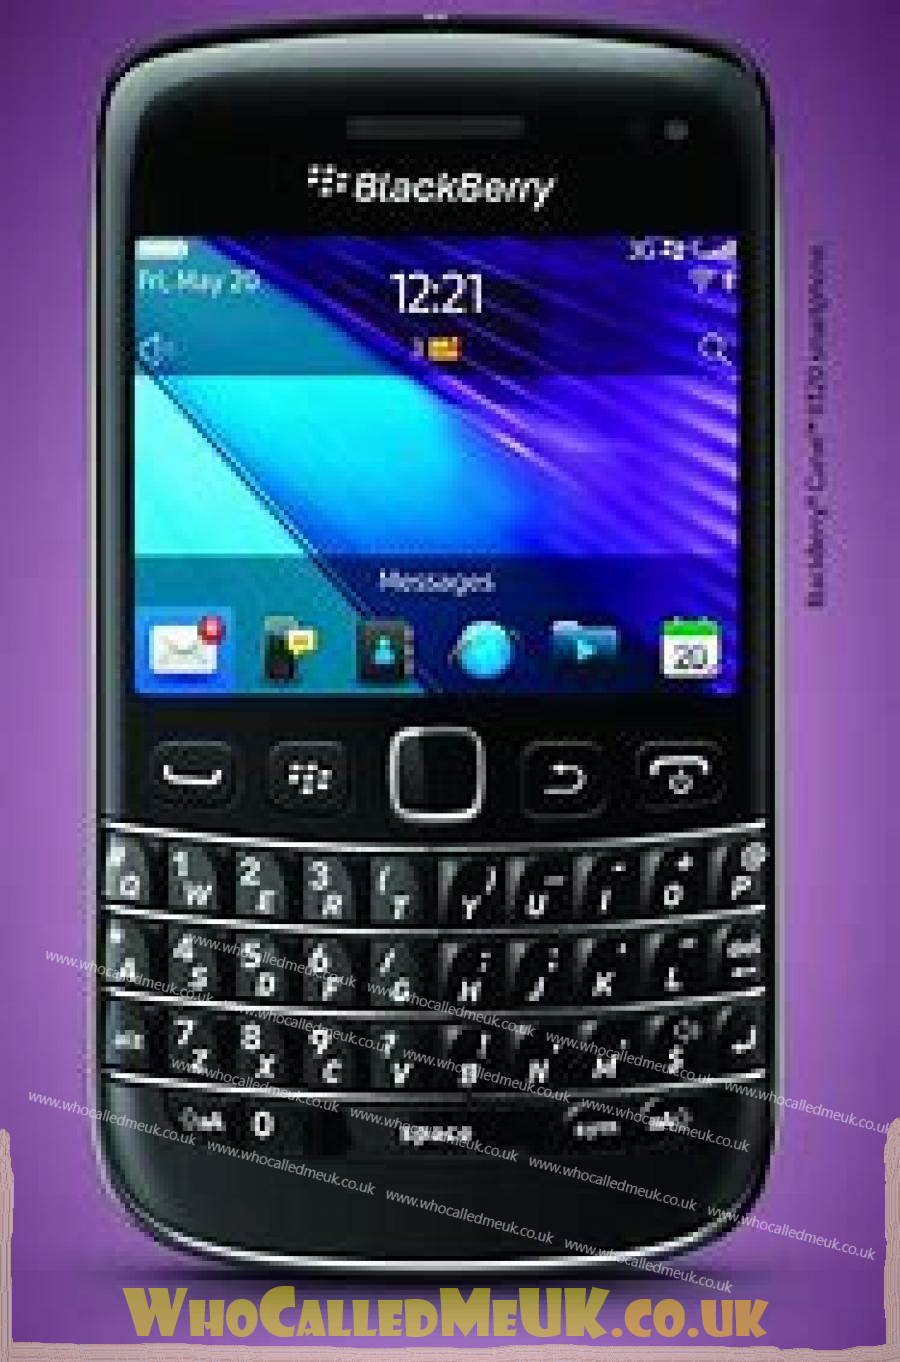 BlackBerry, telephone, smartphone, good equipment, good quality, famous brand